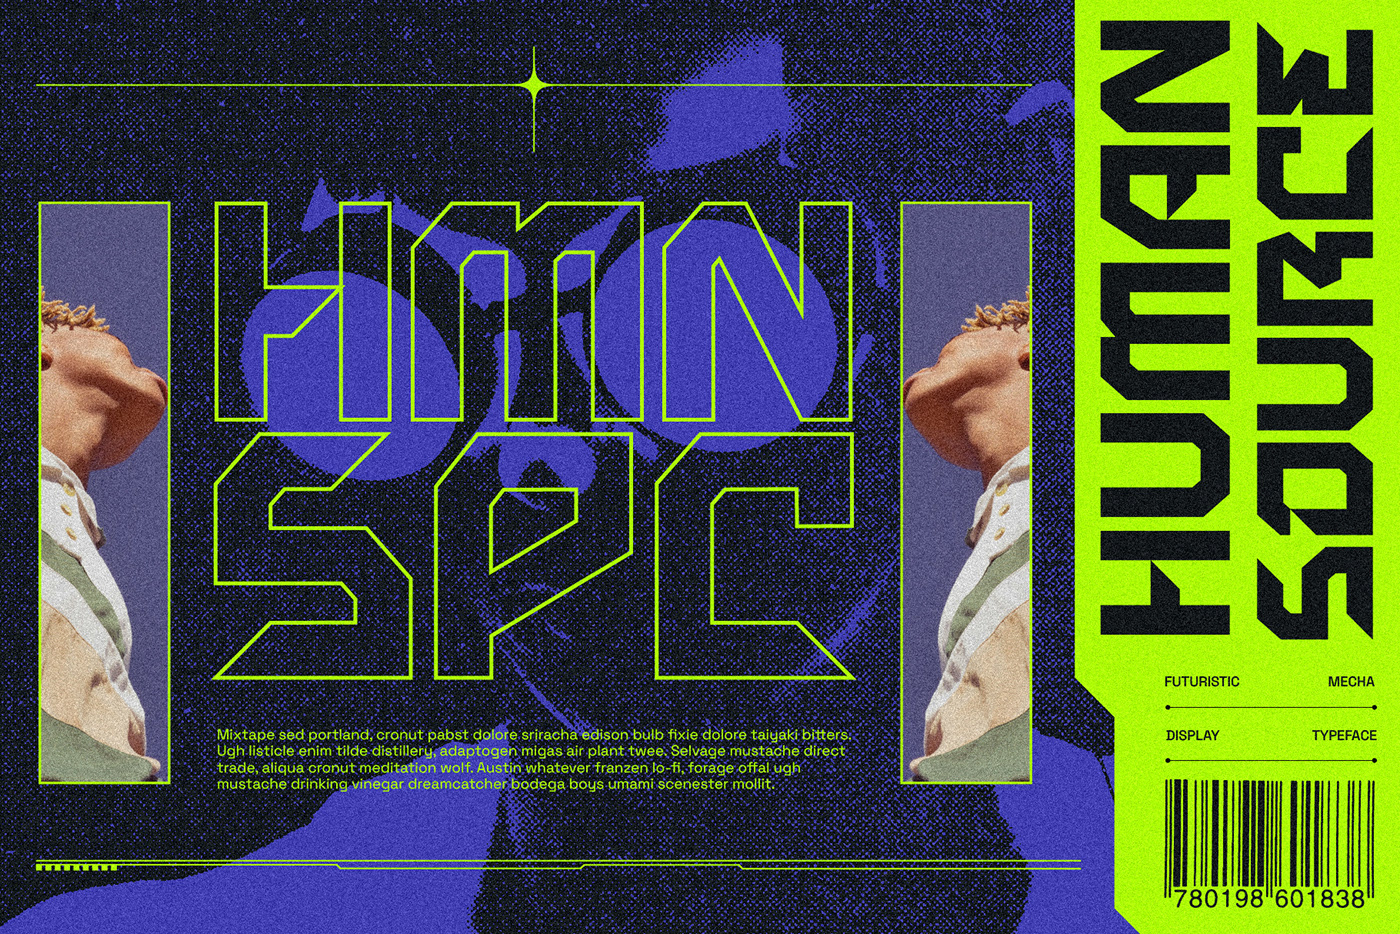 Cyberpunk display font FUTURISM retro font Retro Futurism robotic STEAMPUNK Synthwave vaporwave vintage font